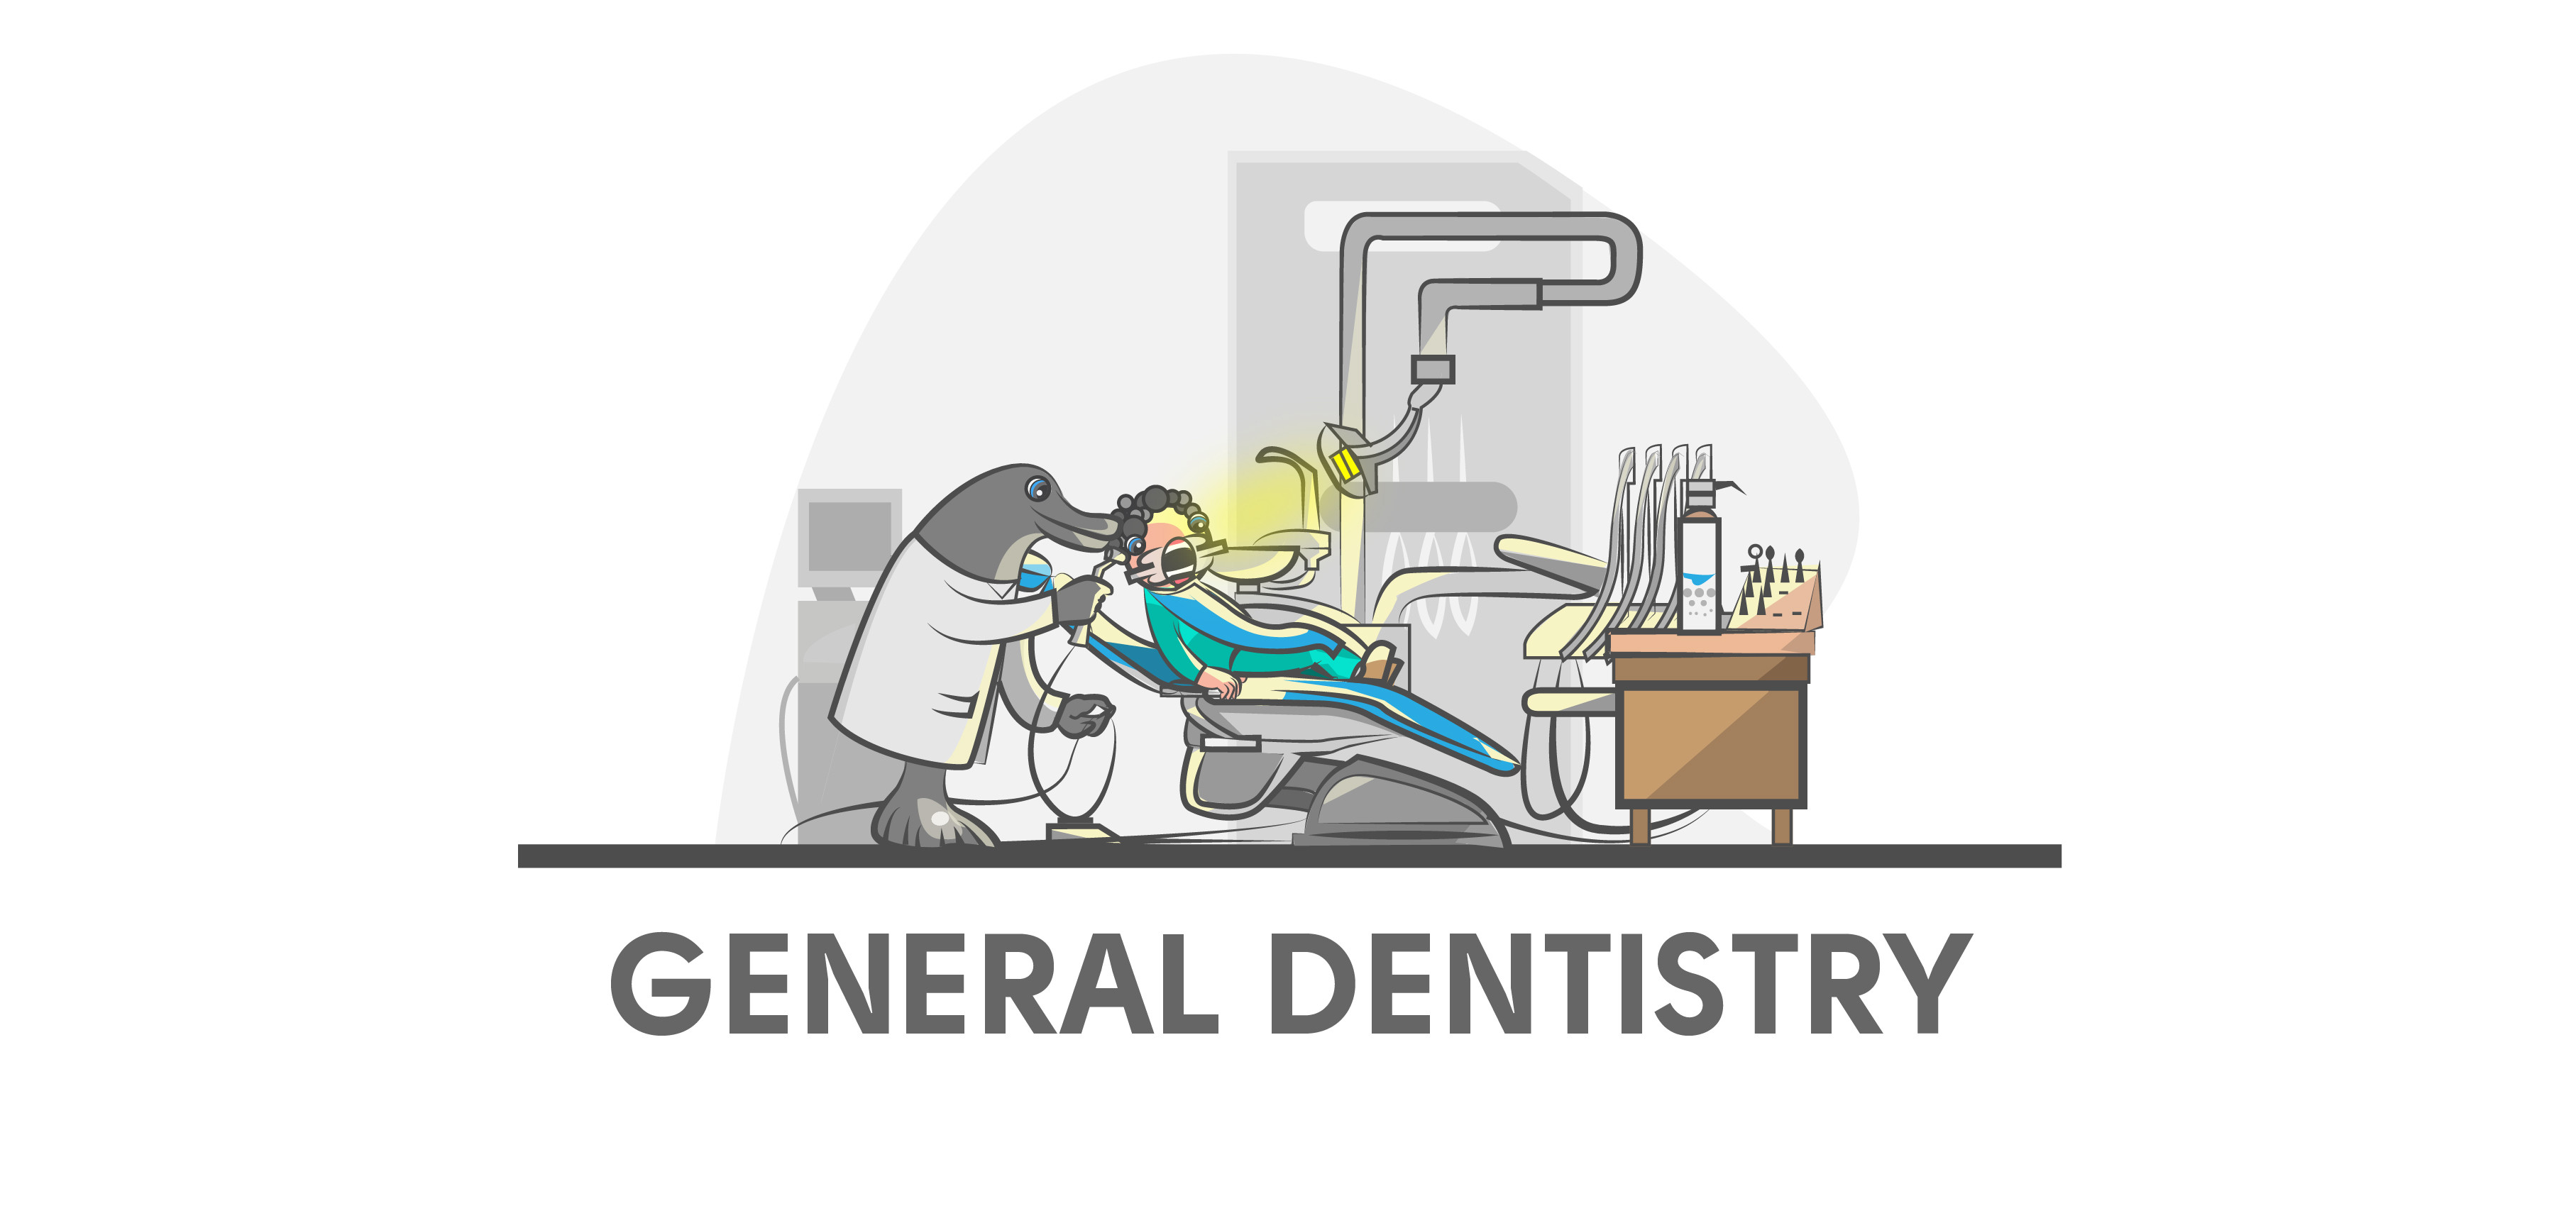 General Dentistry Equipment